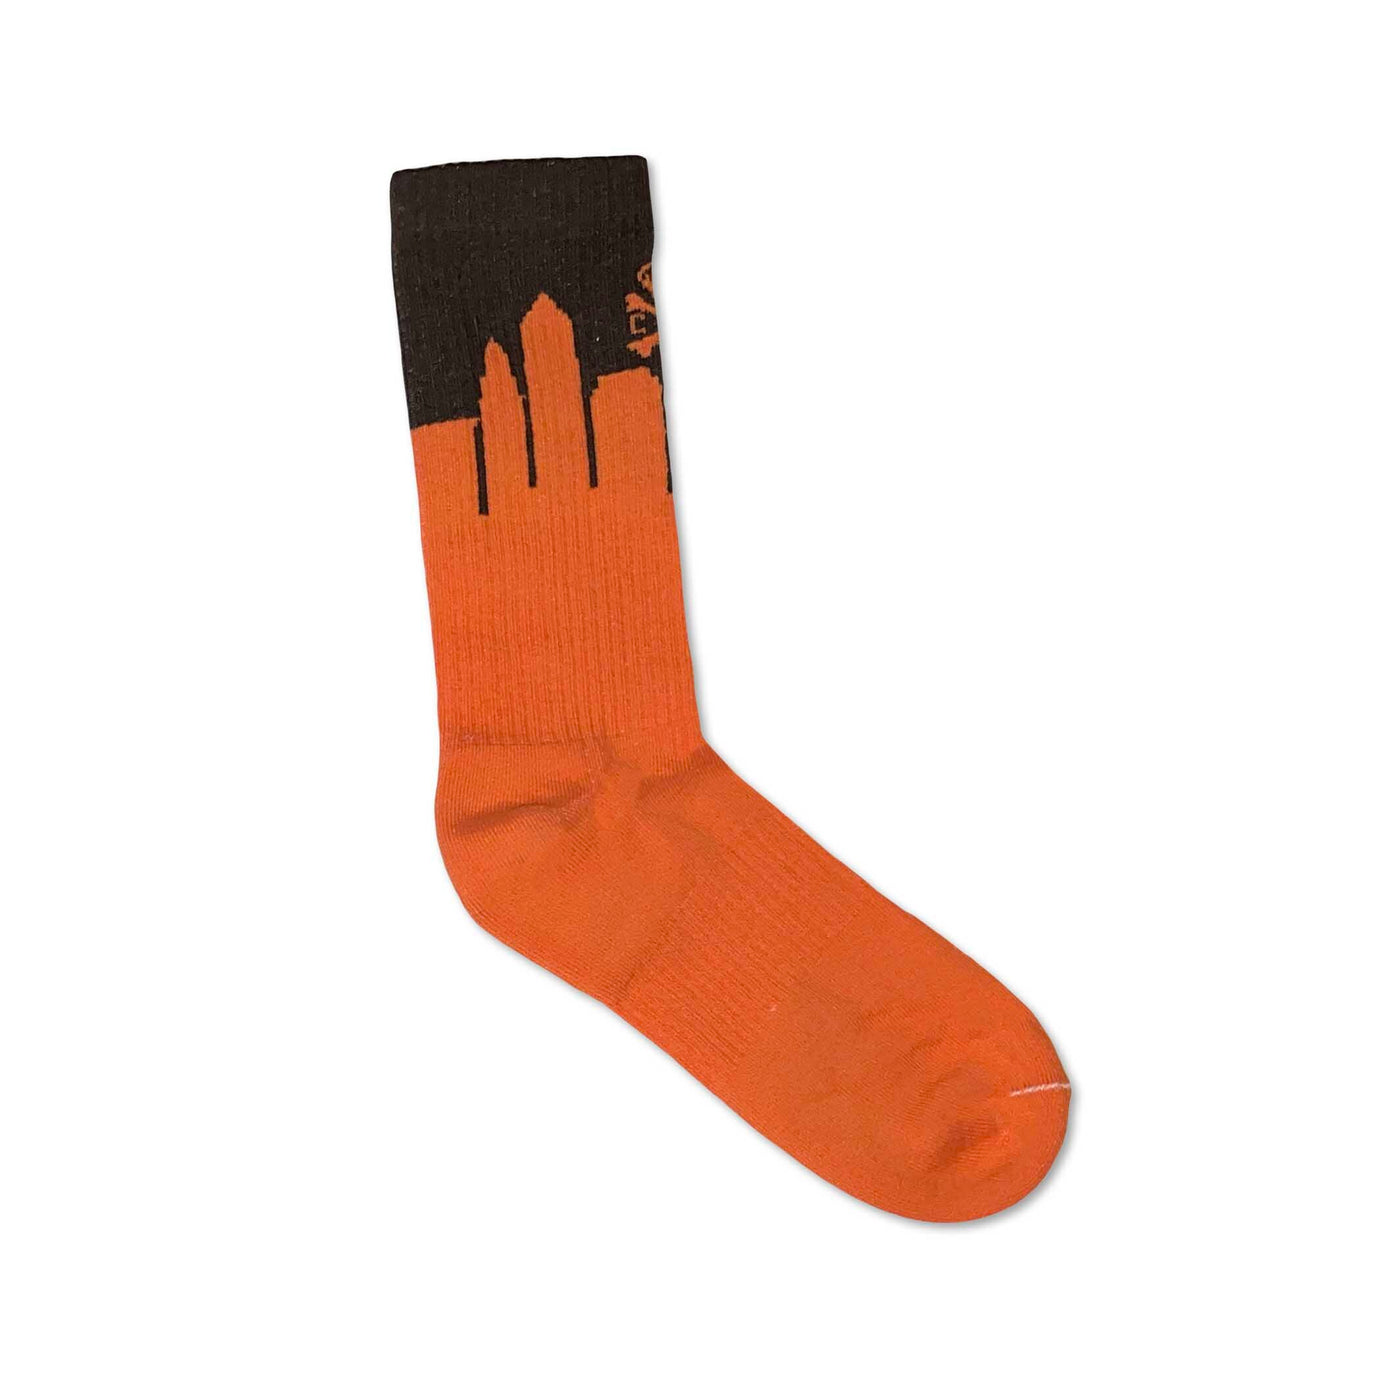 Cleveland Skyline Socks - Brown/Orange